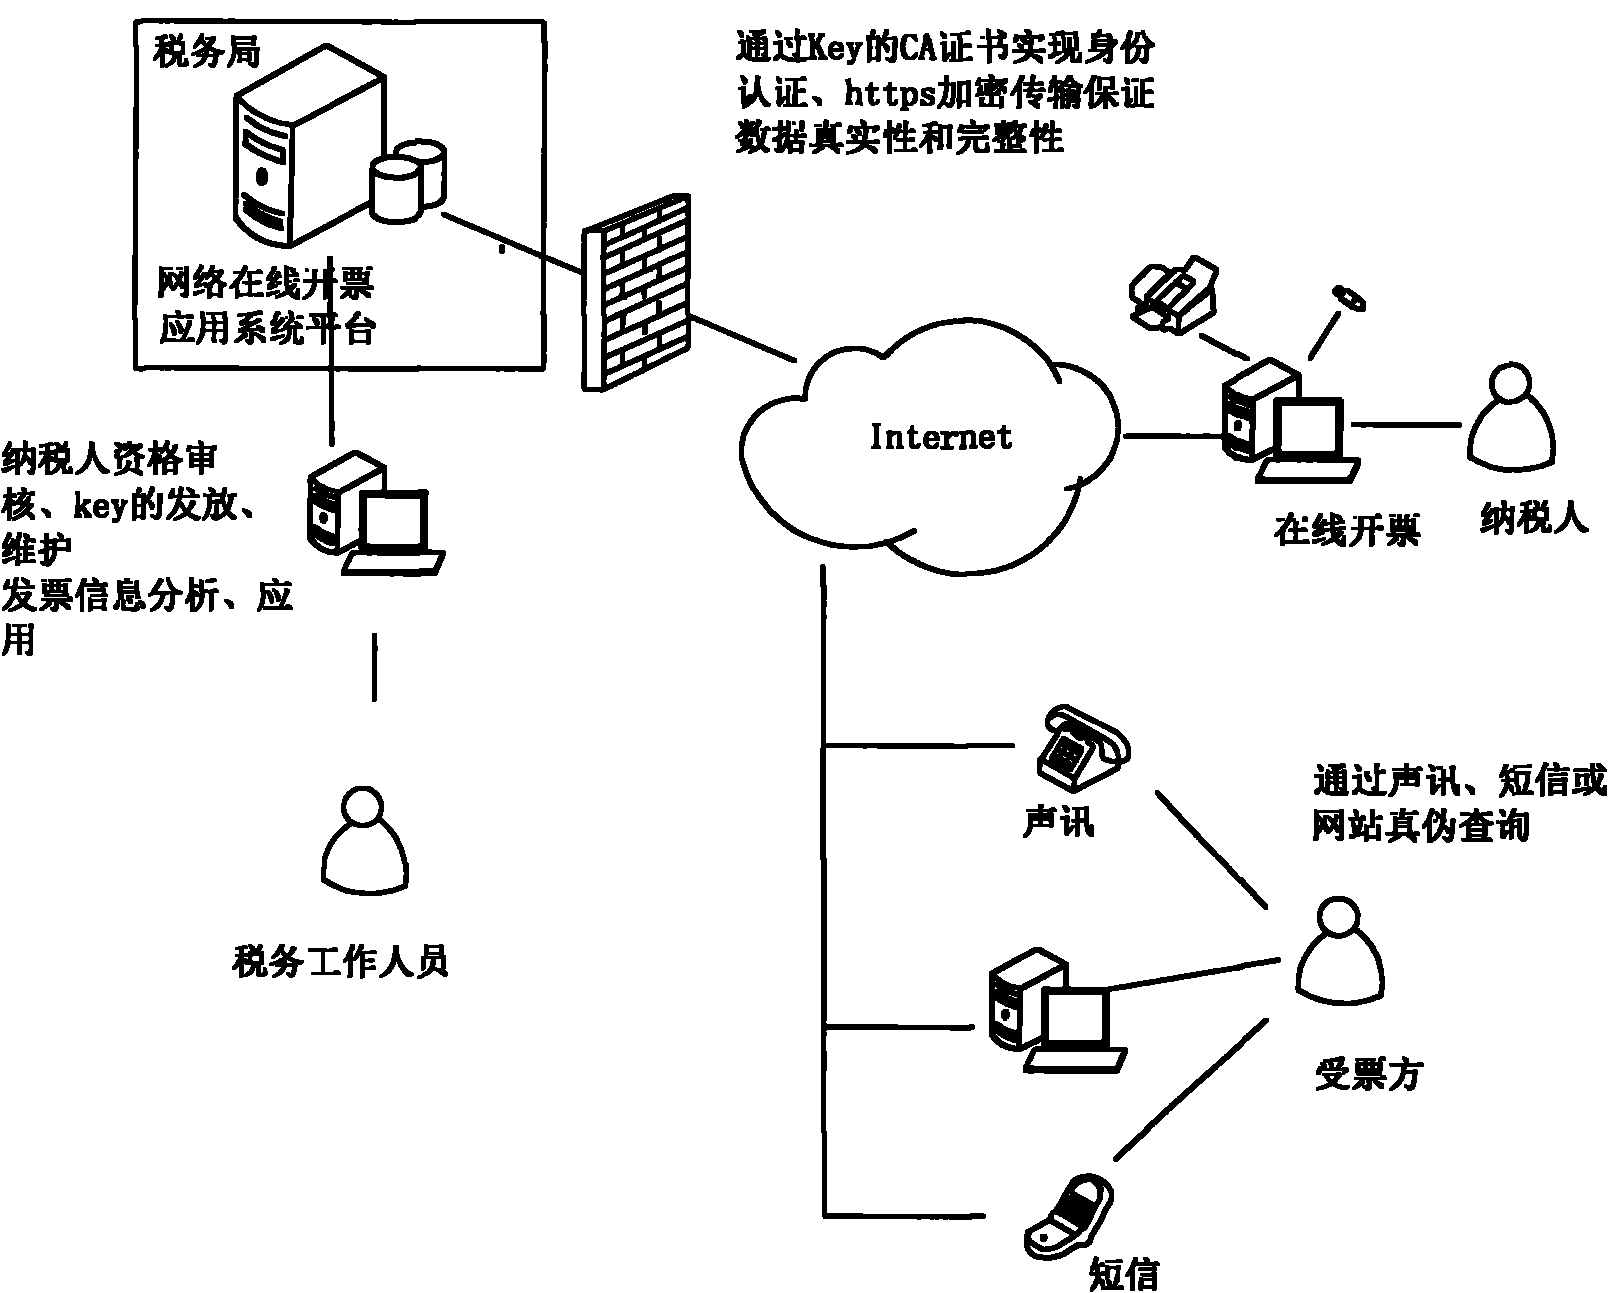 Network online invoice making method